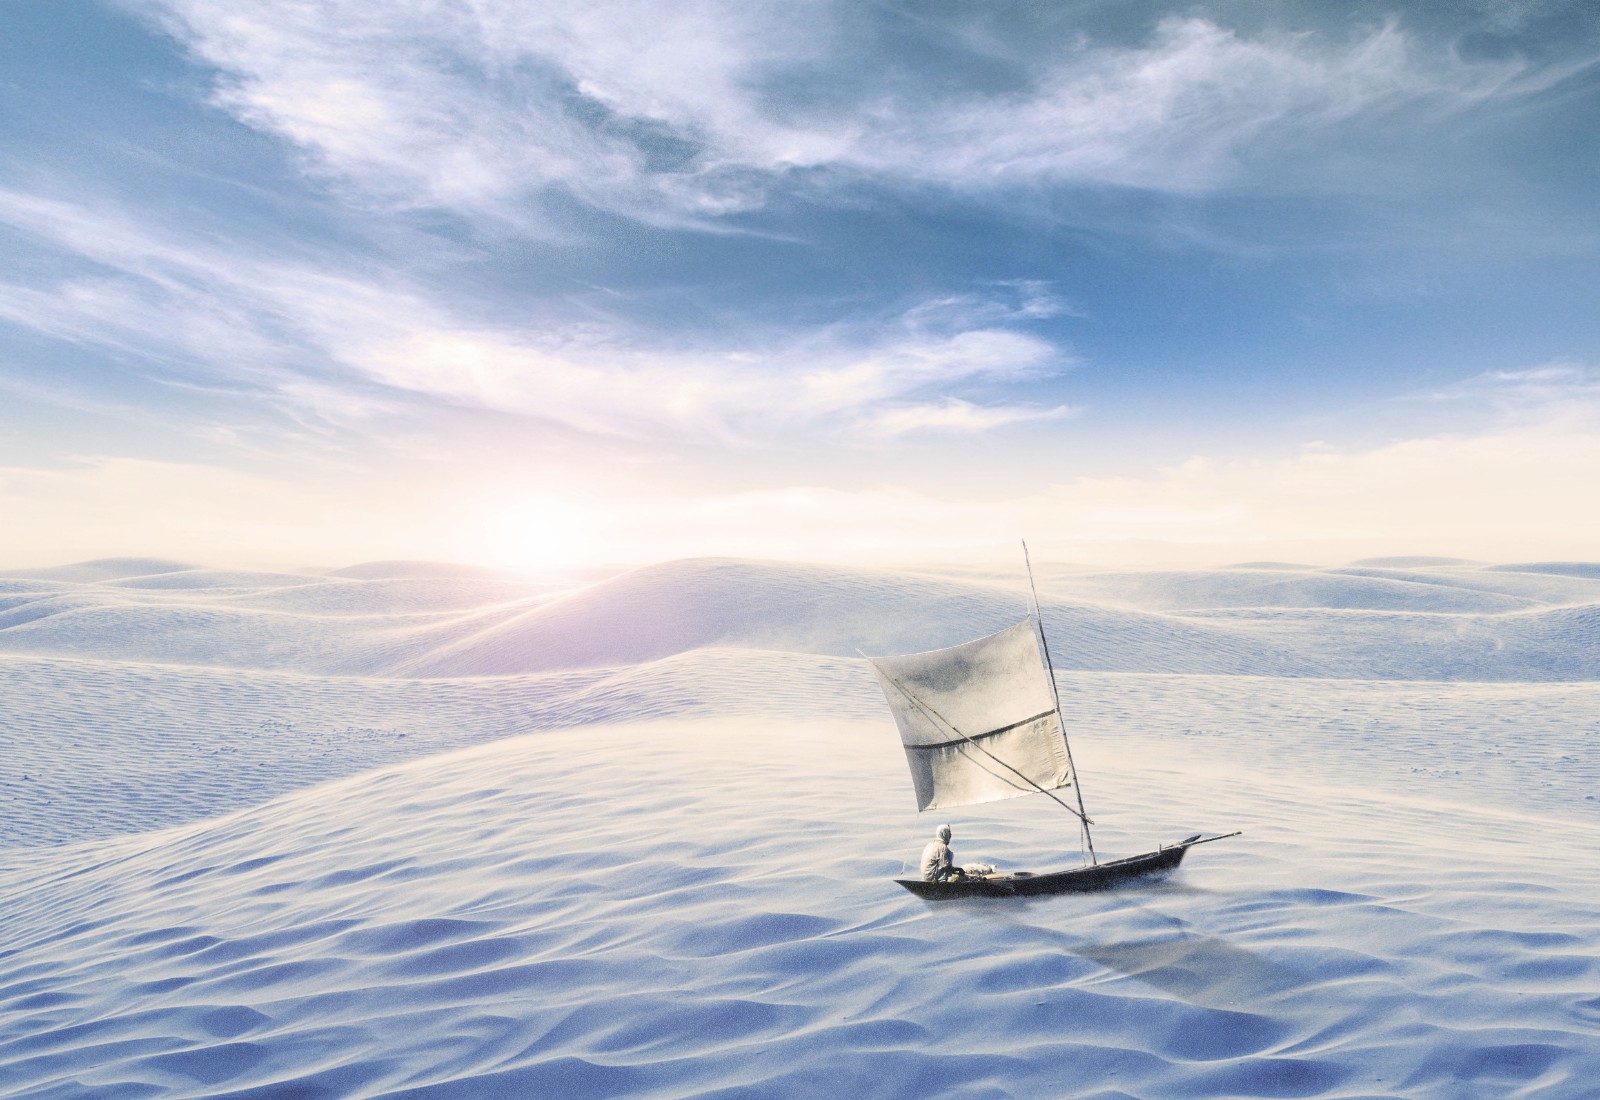 snow_sailing.jpg